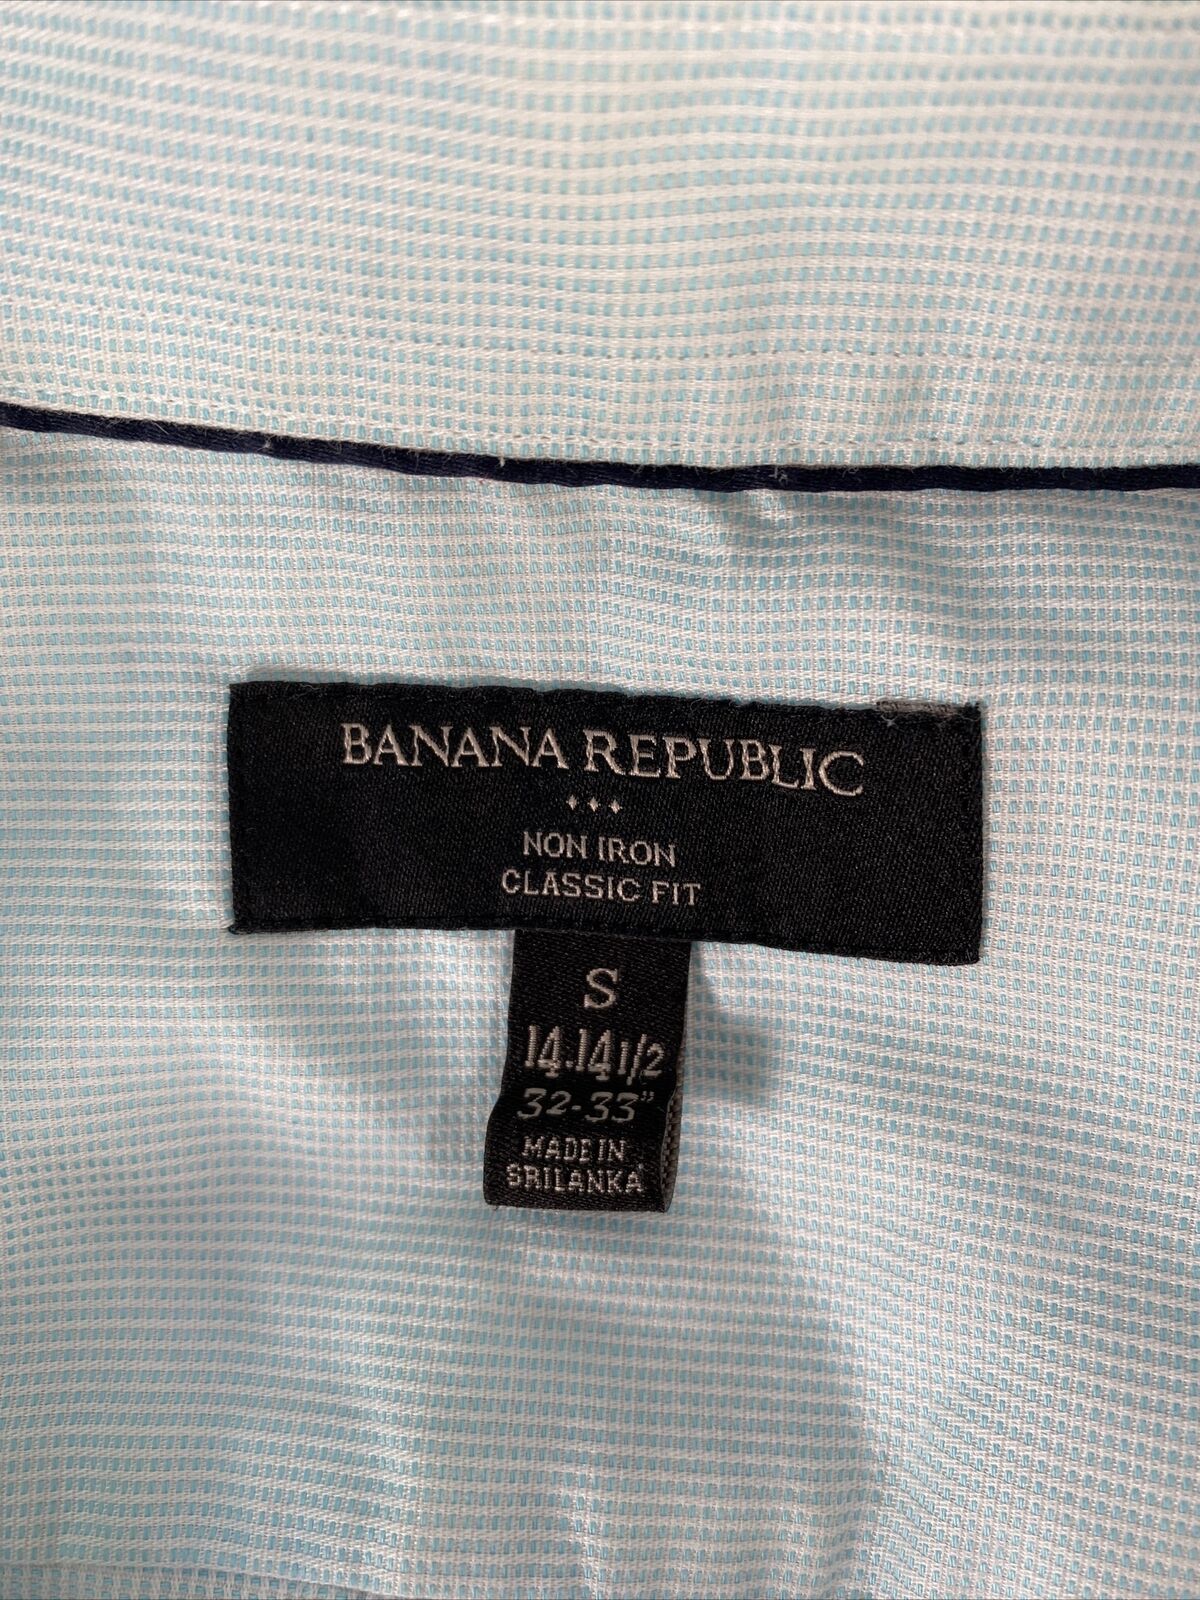 Banana Republic Men's Blue Non-Iron Classic Fit Button Up Shirt -S (32-33)